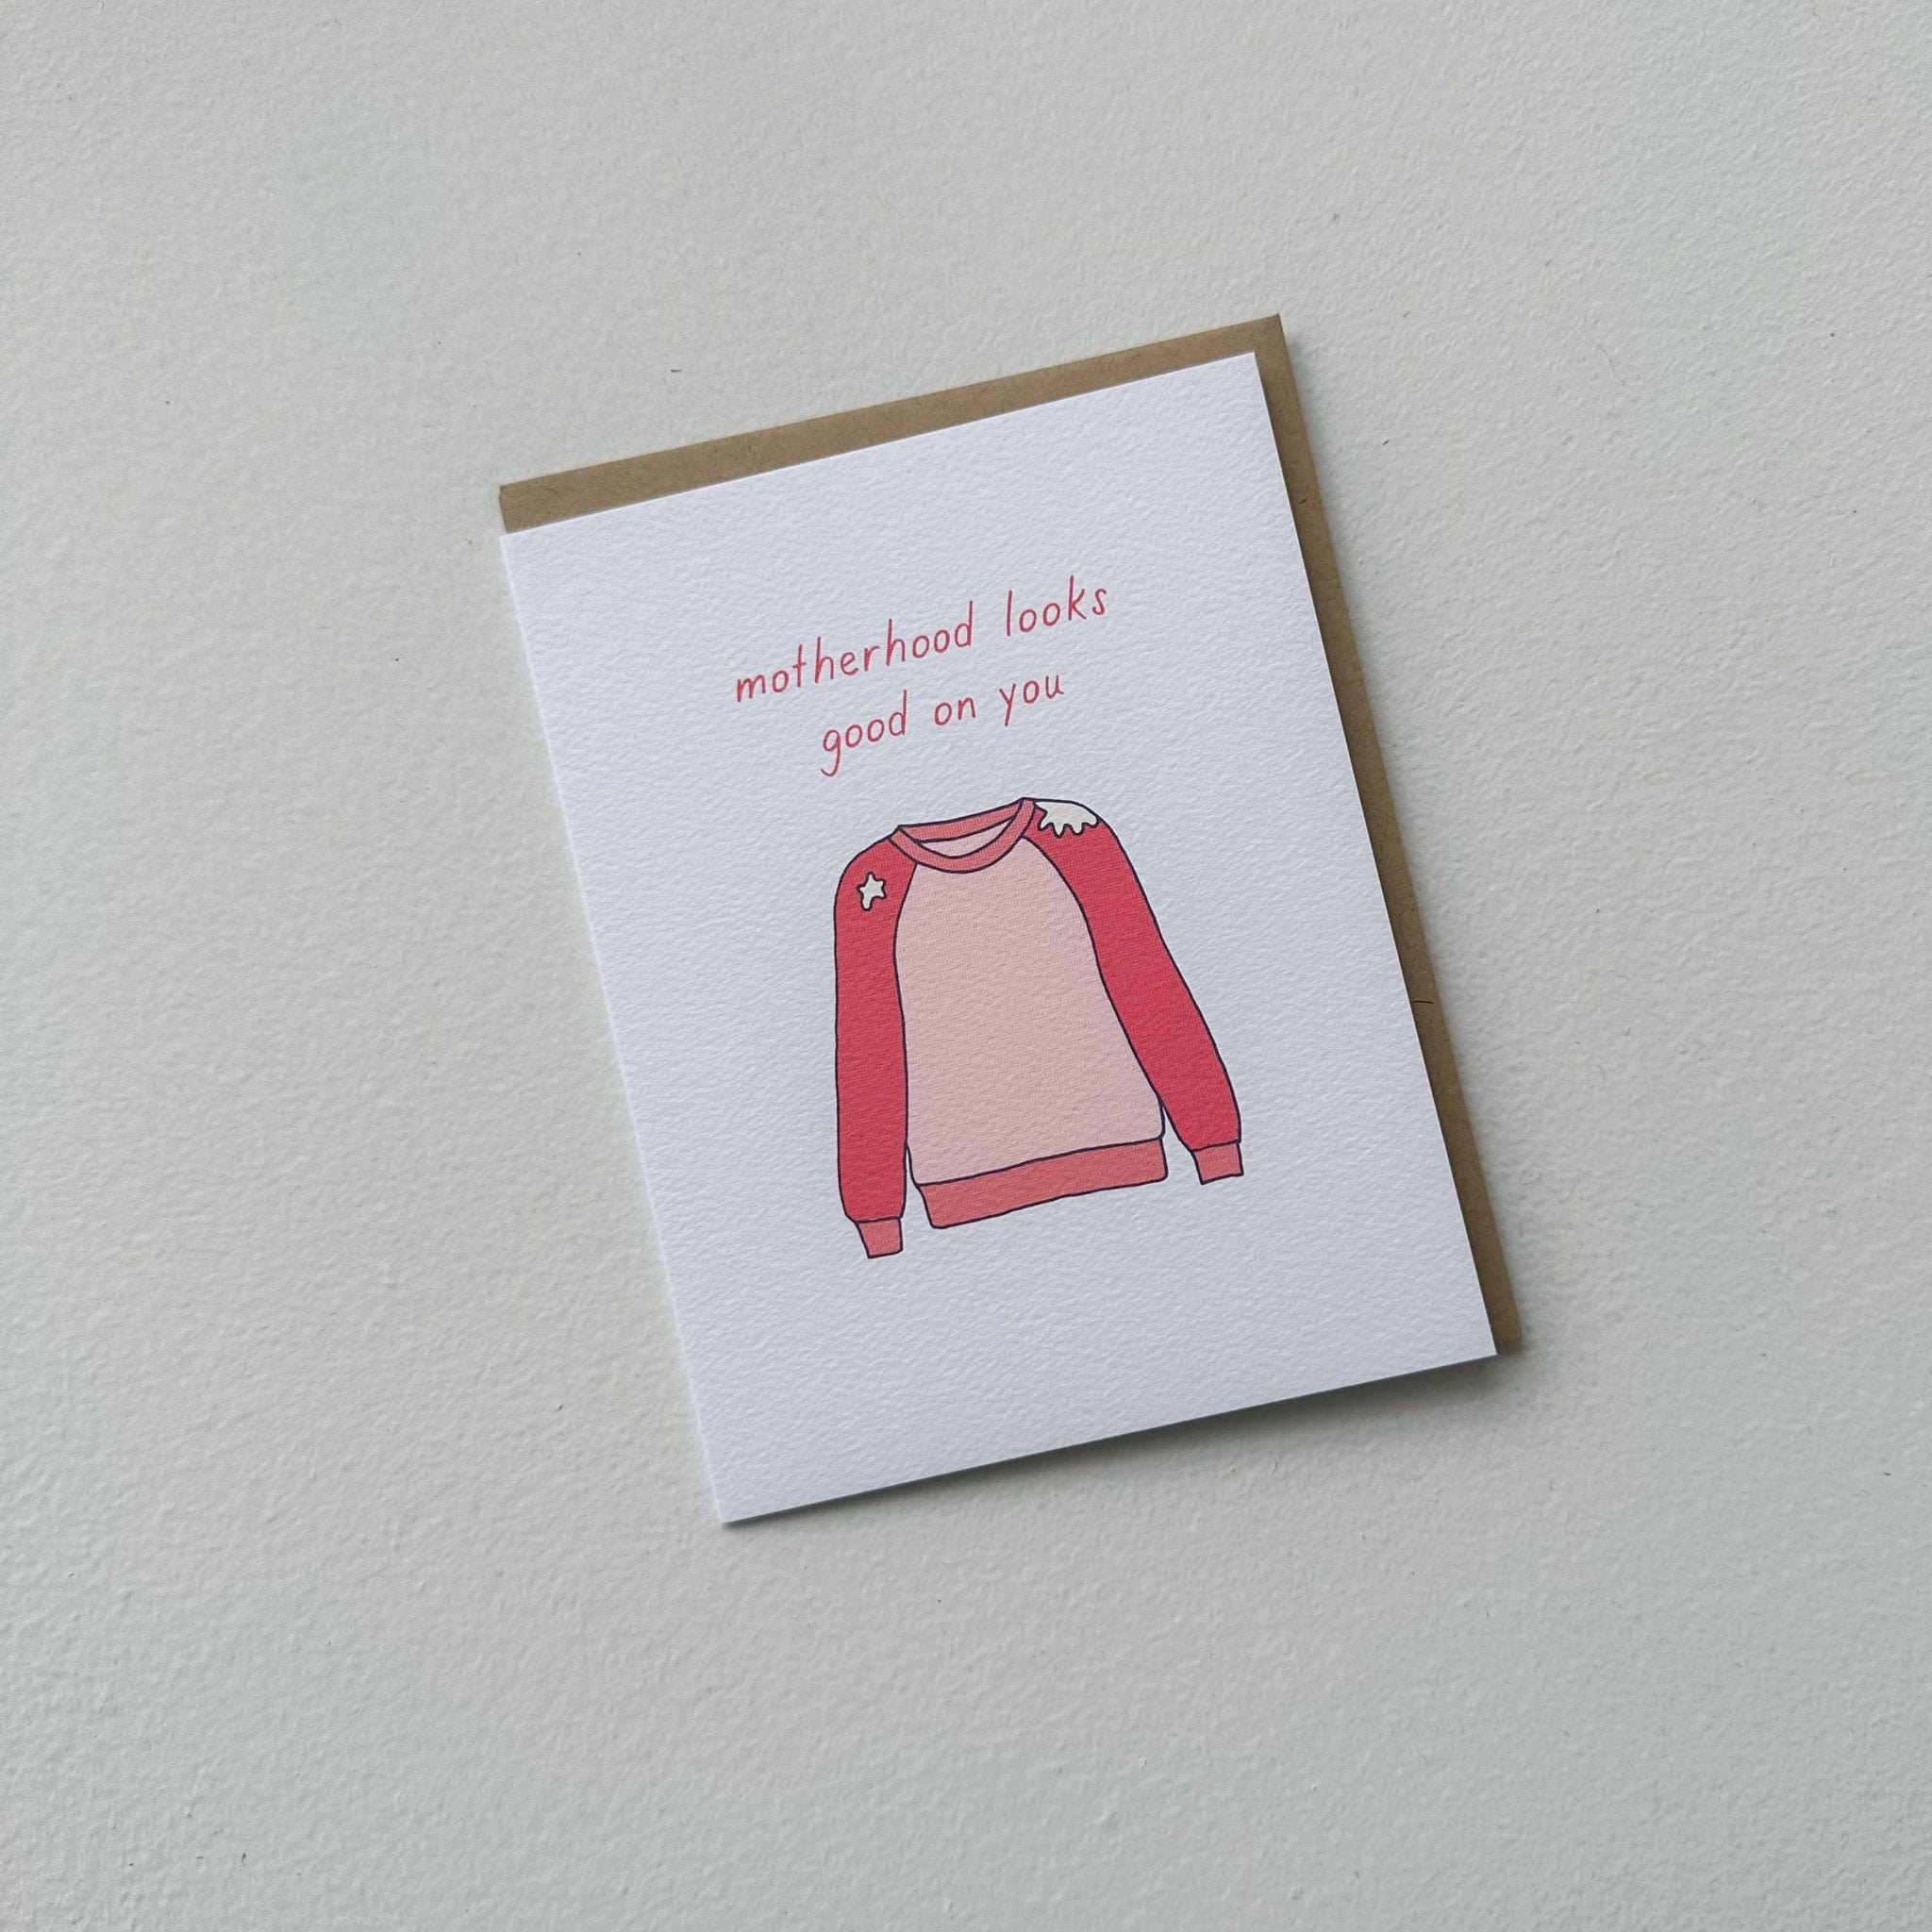 Tiny Hooray Stationery Motherhood Looks Good on You Card